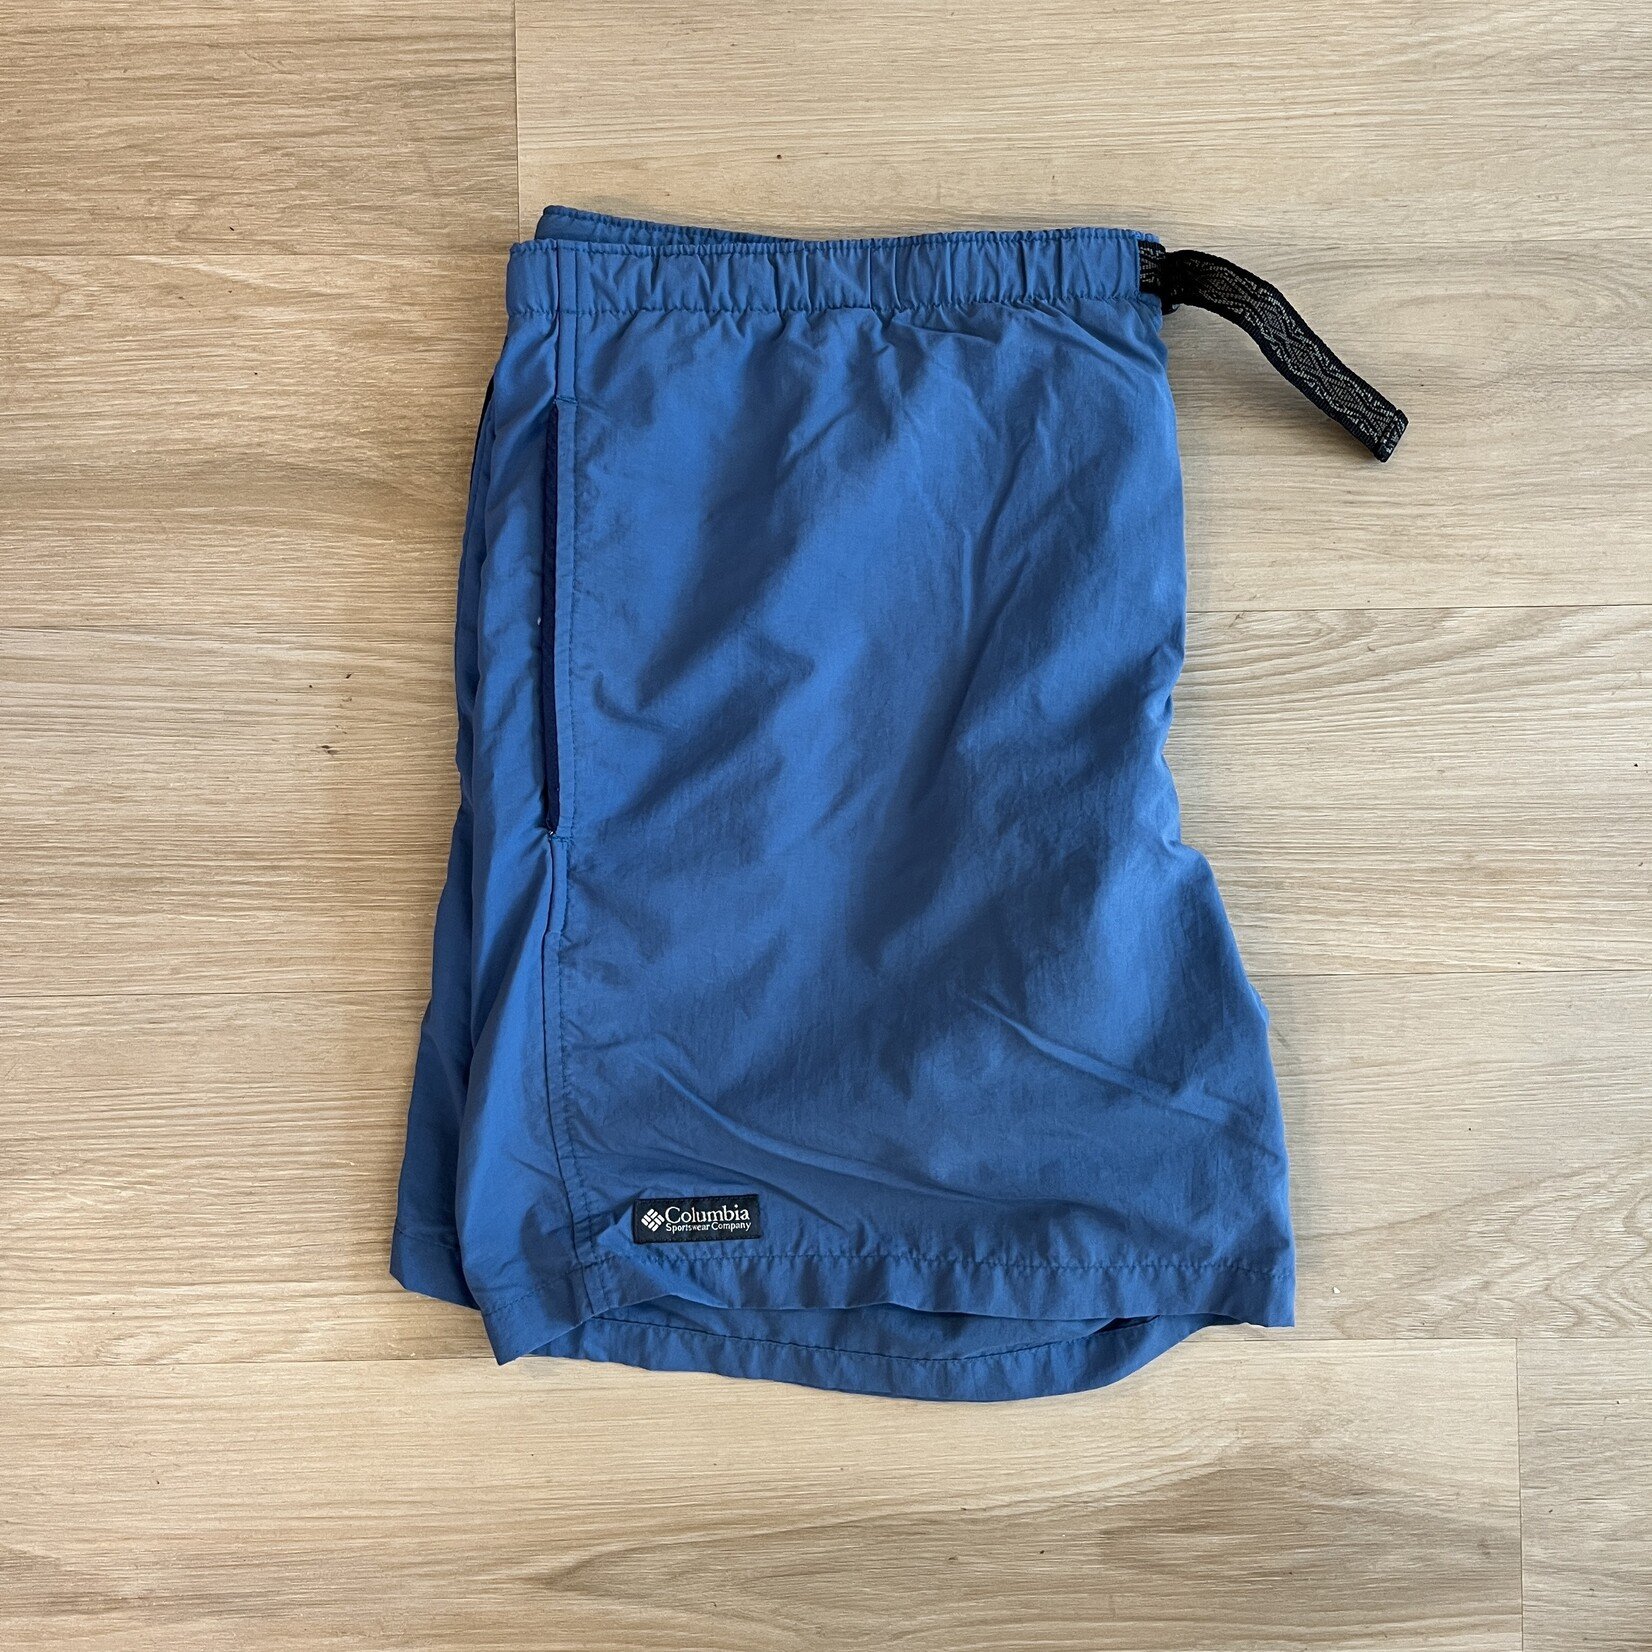 13902	columbia blue board shorts sz. M